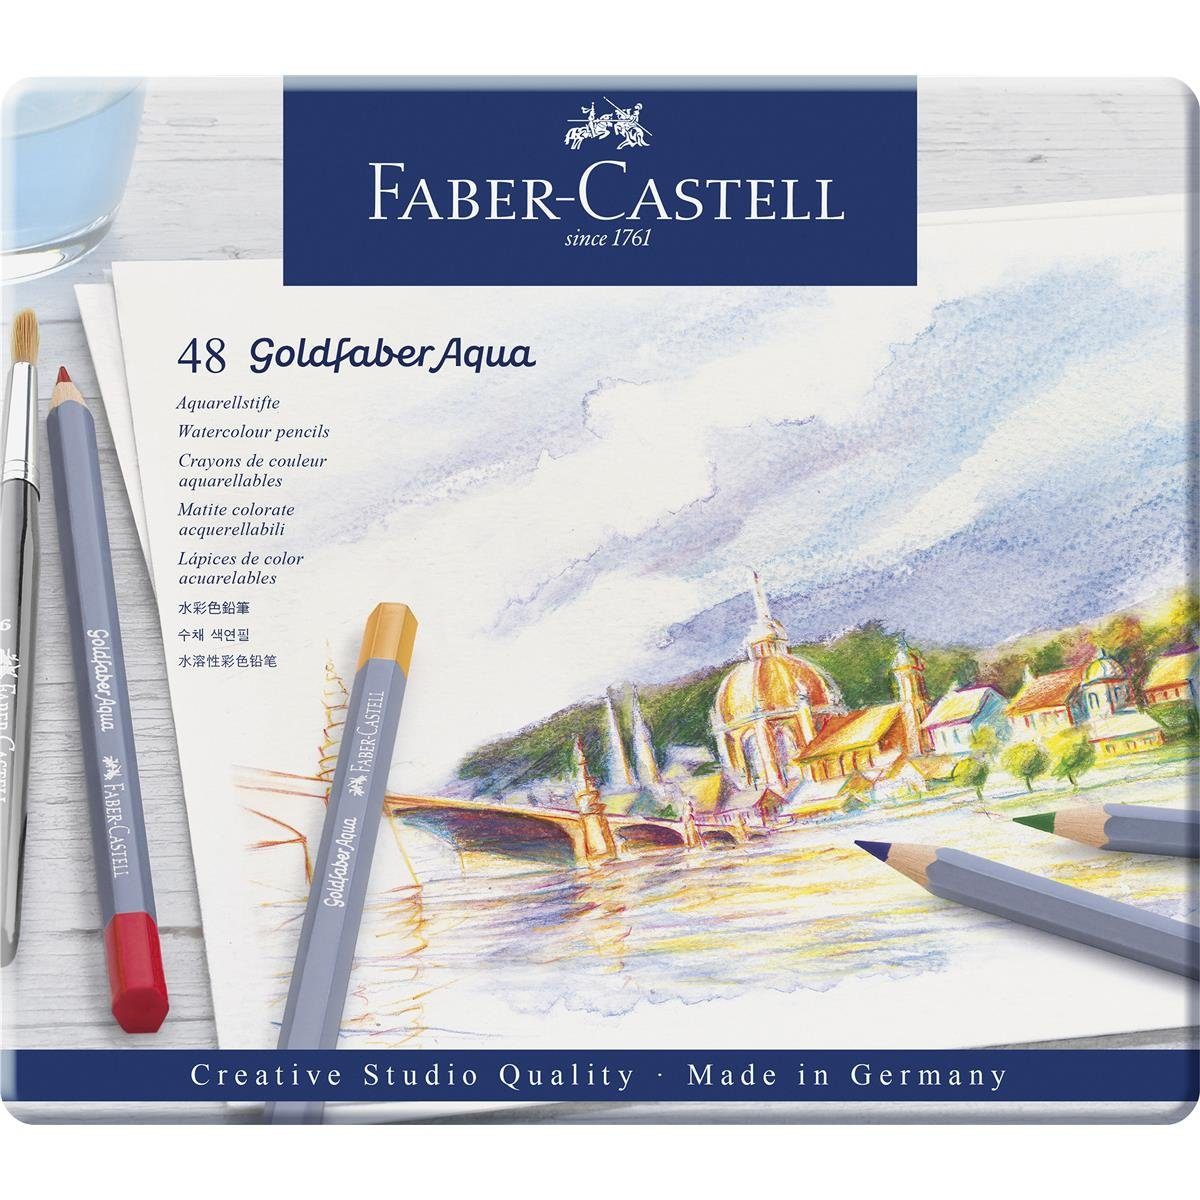 Faber-Castell Aquarellstifte Goldfaber Faber-Castell Aquarellfarbstift 48-Metalletui - Aqua